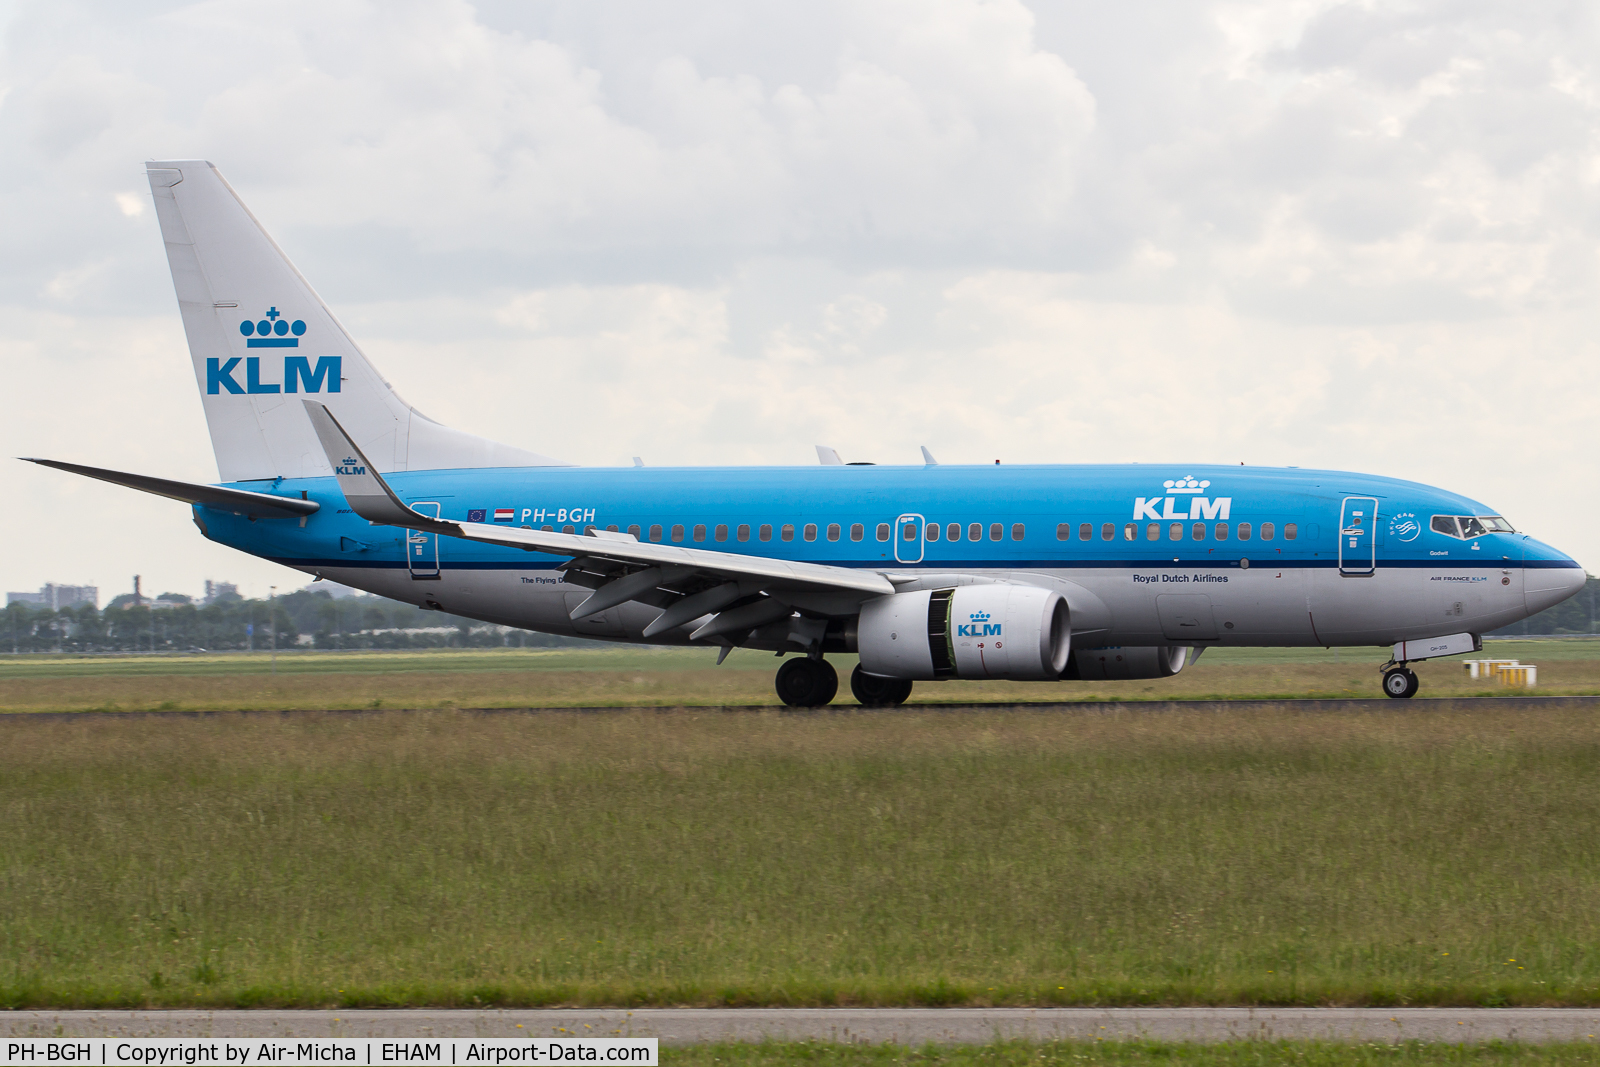 PH-BGH, 2009 Boeing 737-7K2 C/N 38053, KLM Royal Dutch Airlines